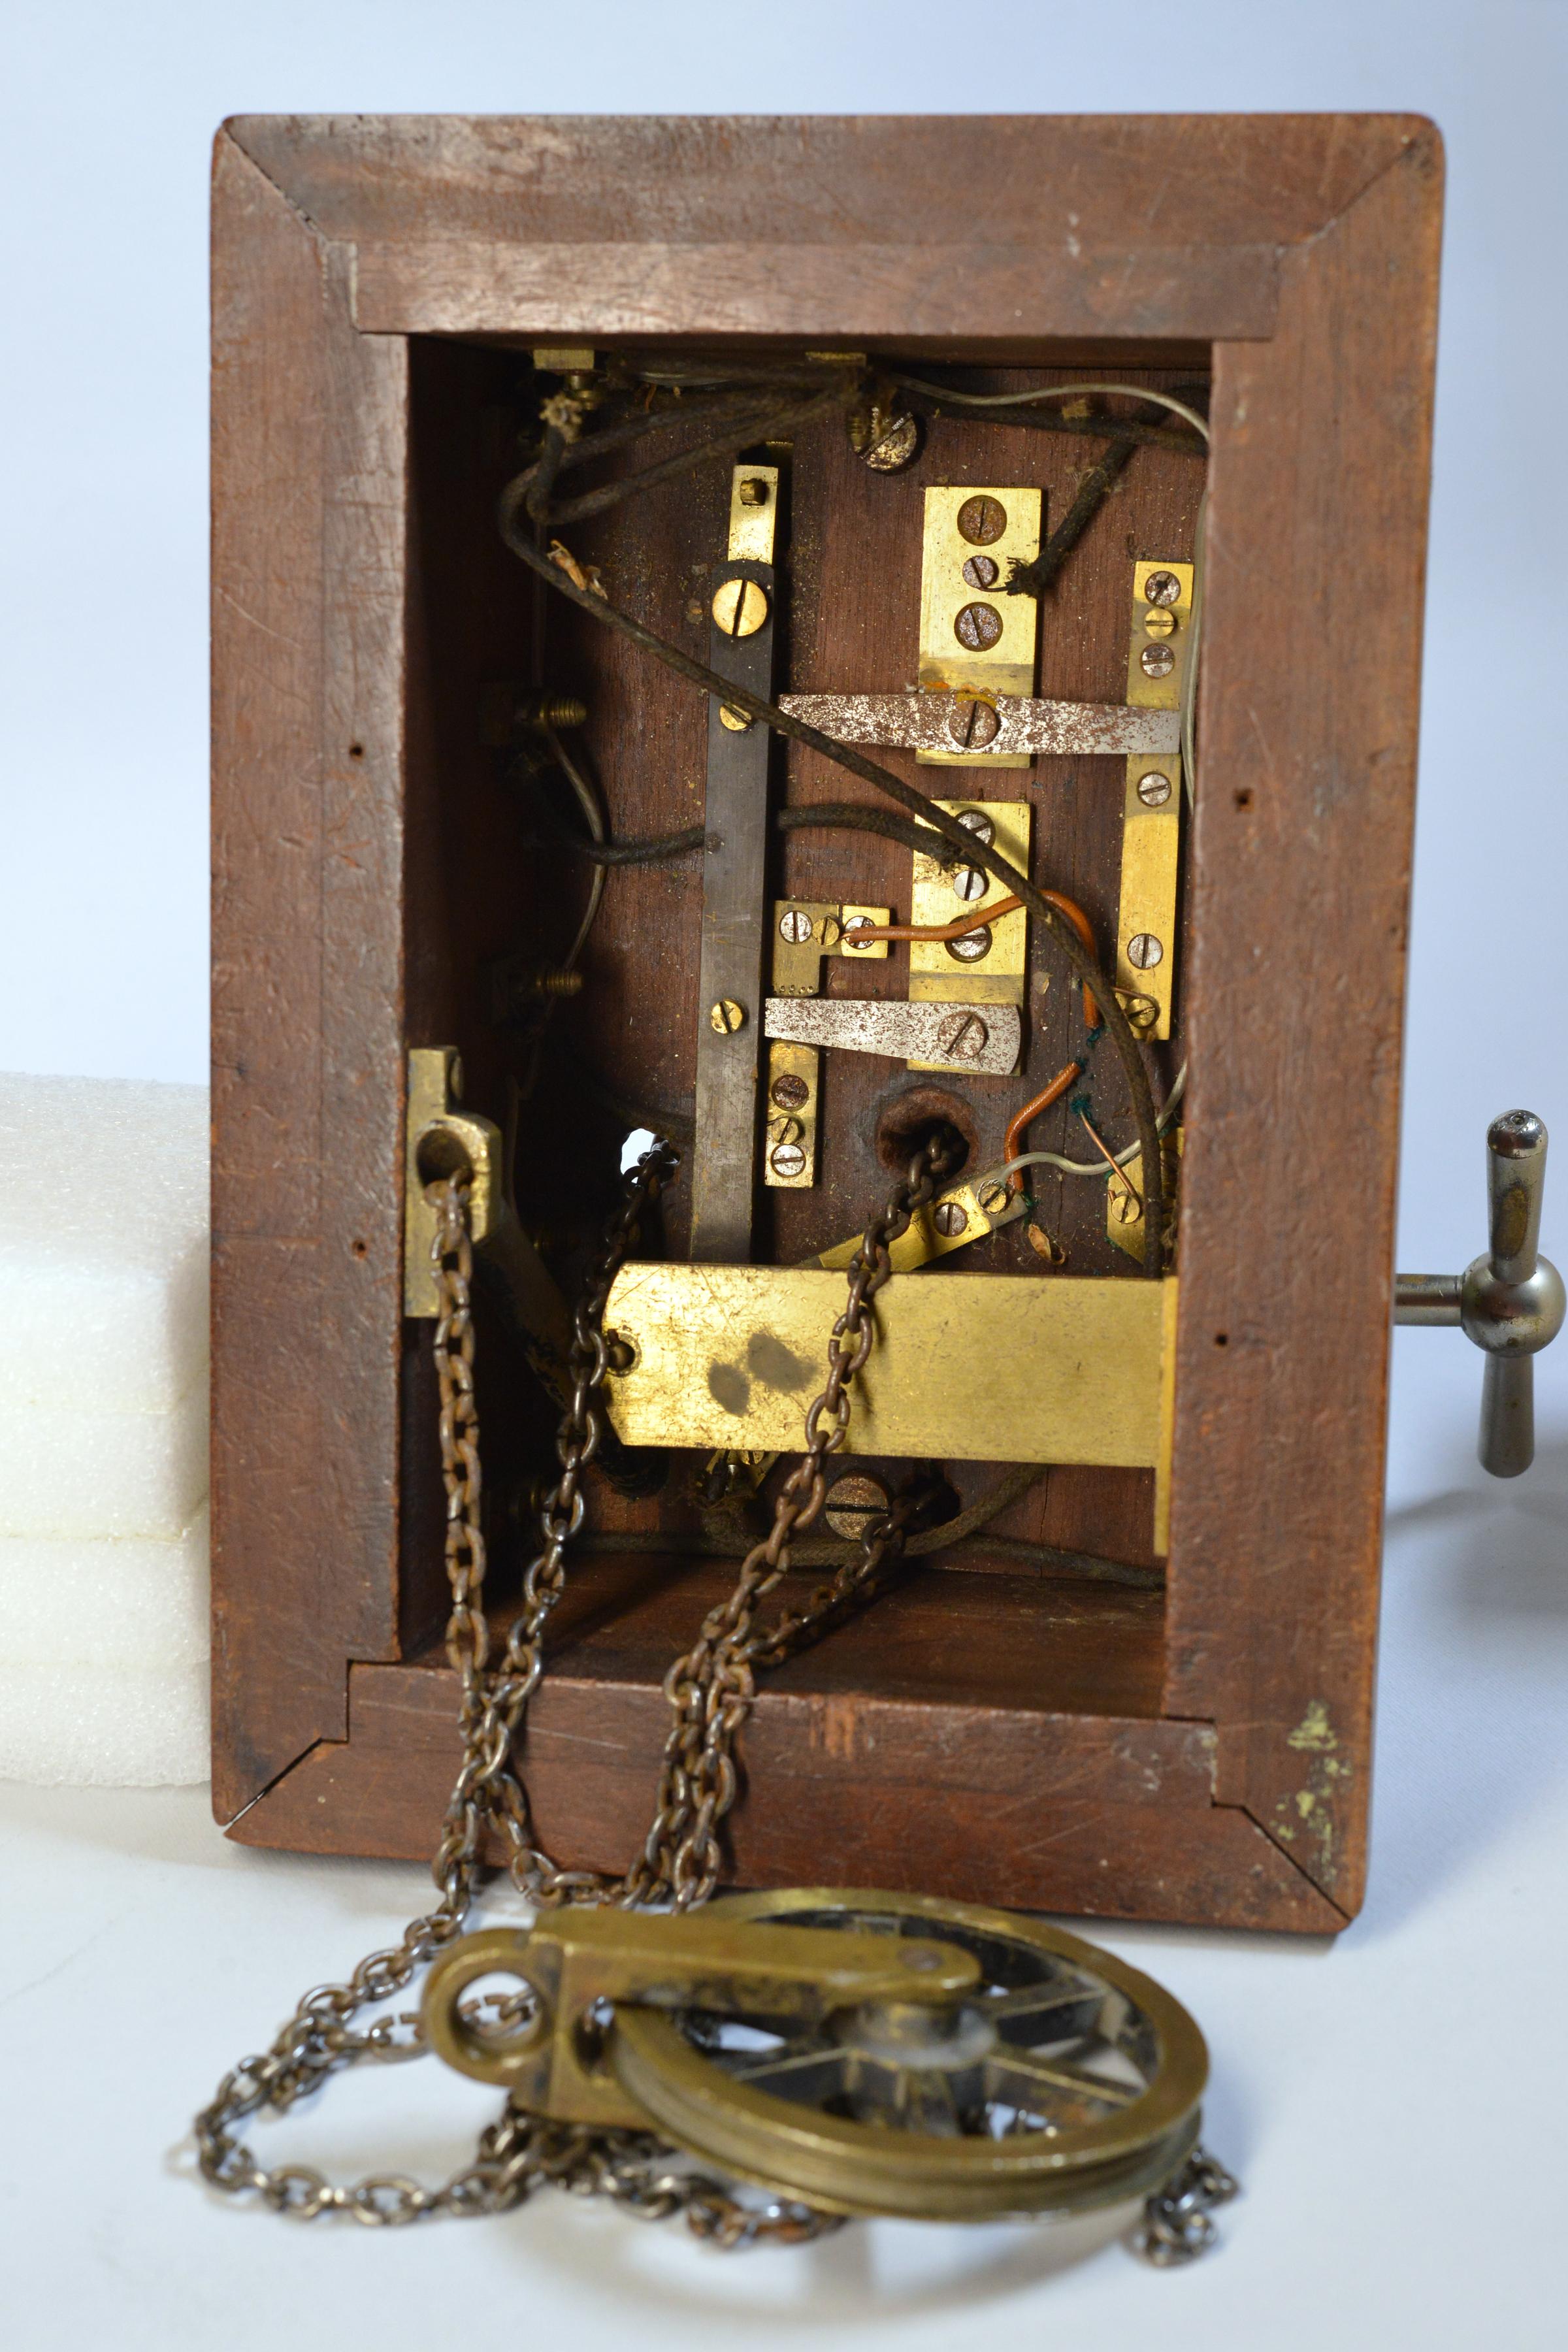 Antique Danish SNTS Morse Telegraph Register Wheatstone transmitter For Sale 3